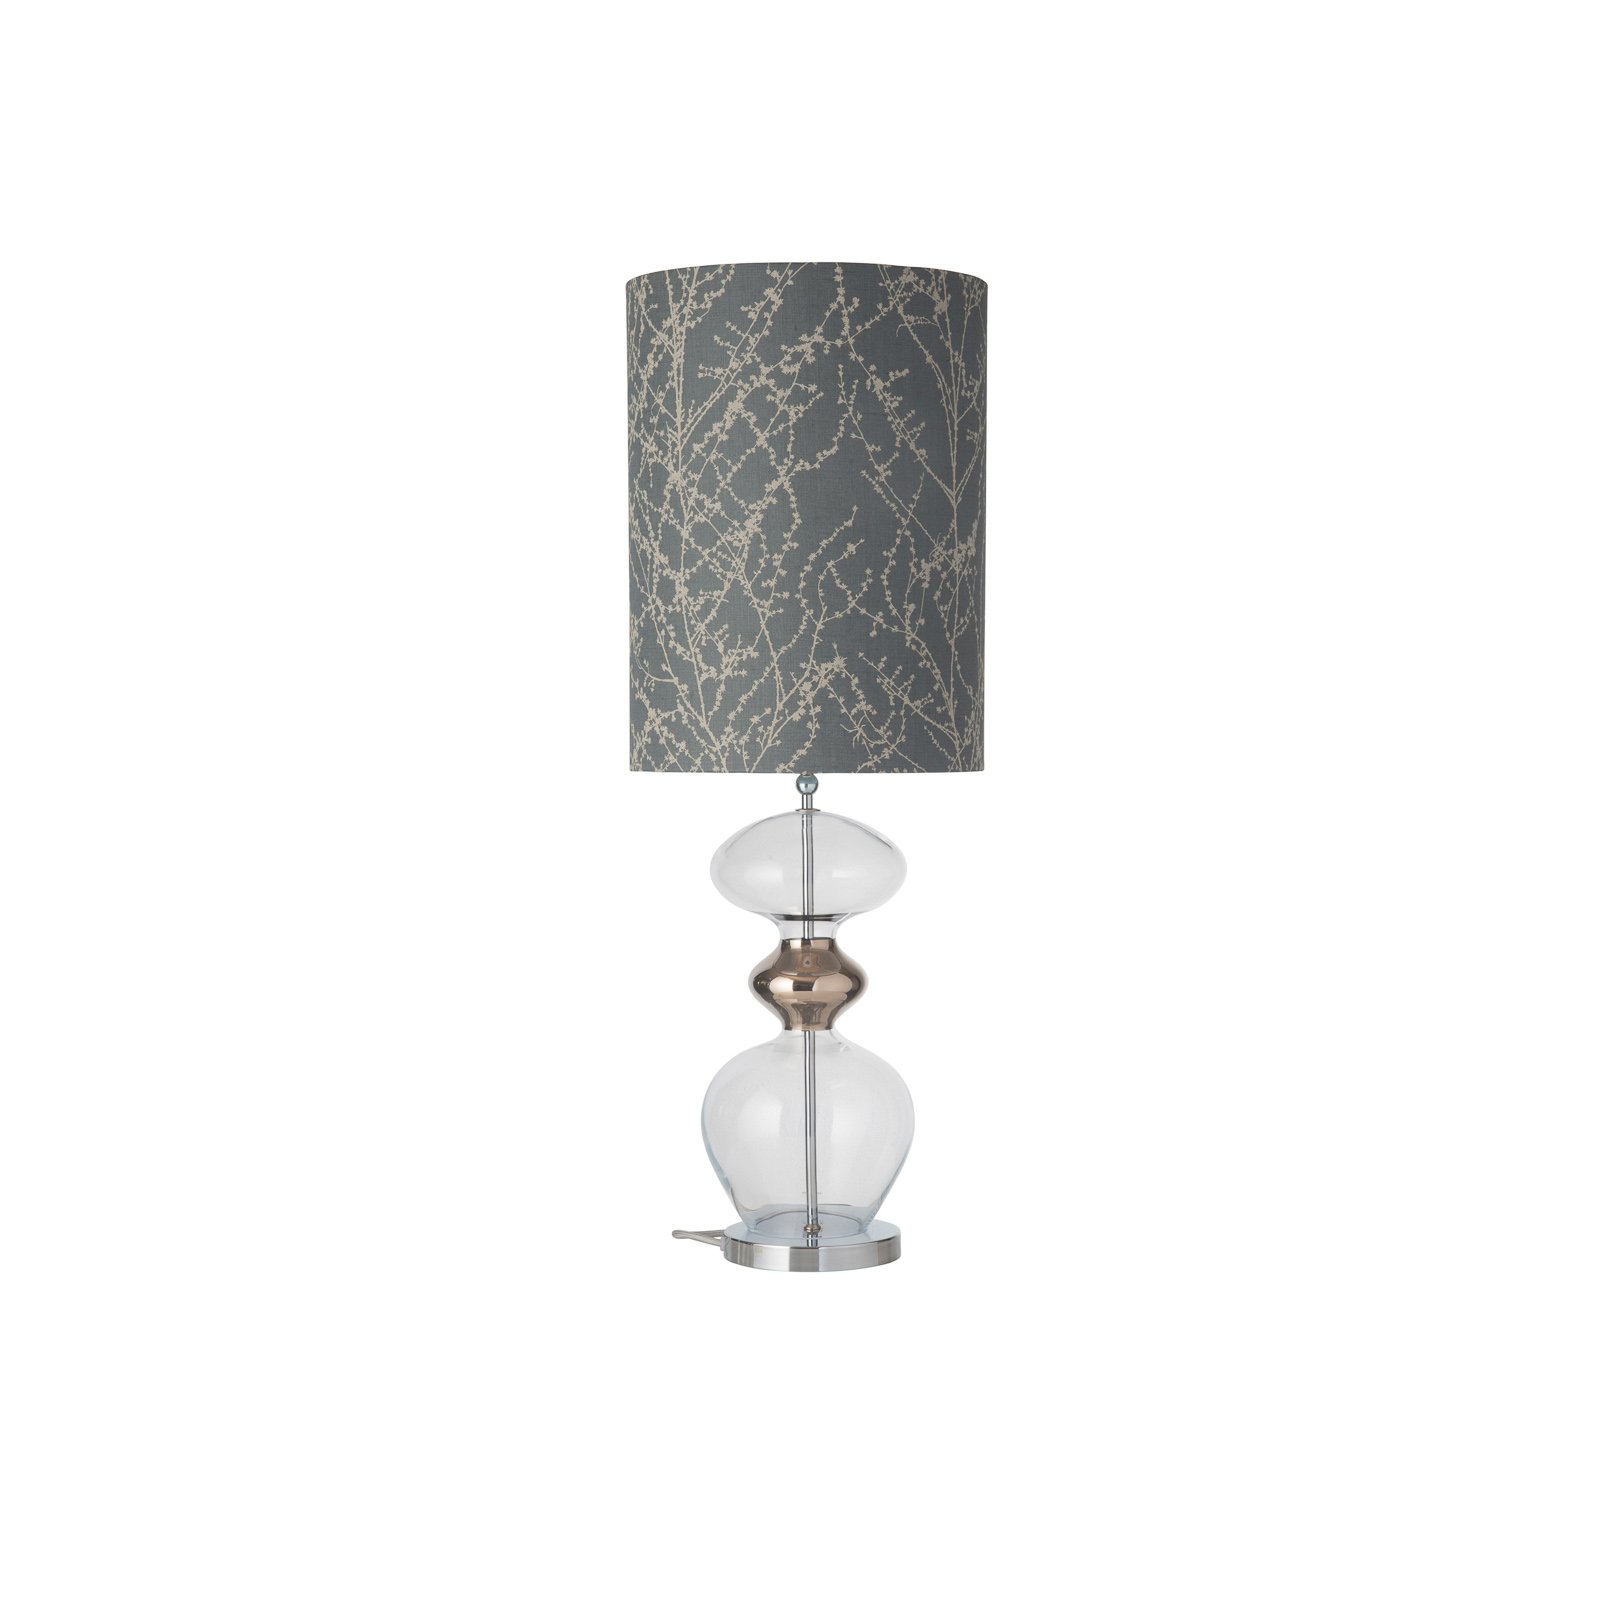 EBB & FLOW Futura table lamp, Branches grey/silver